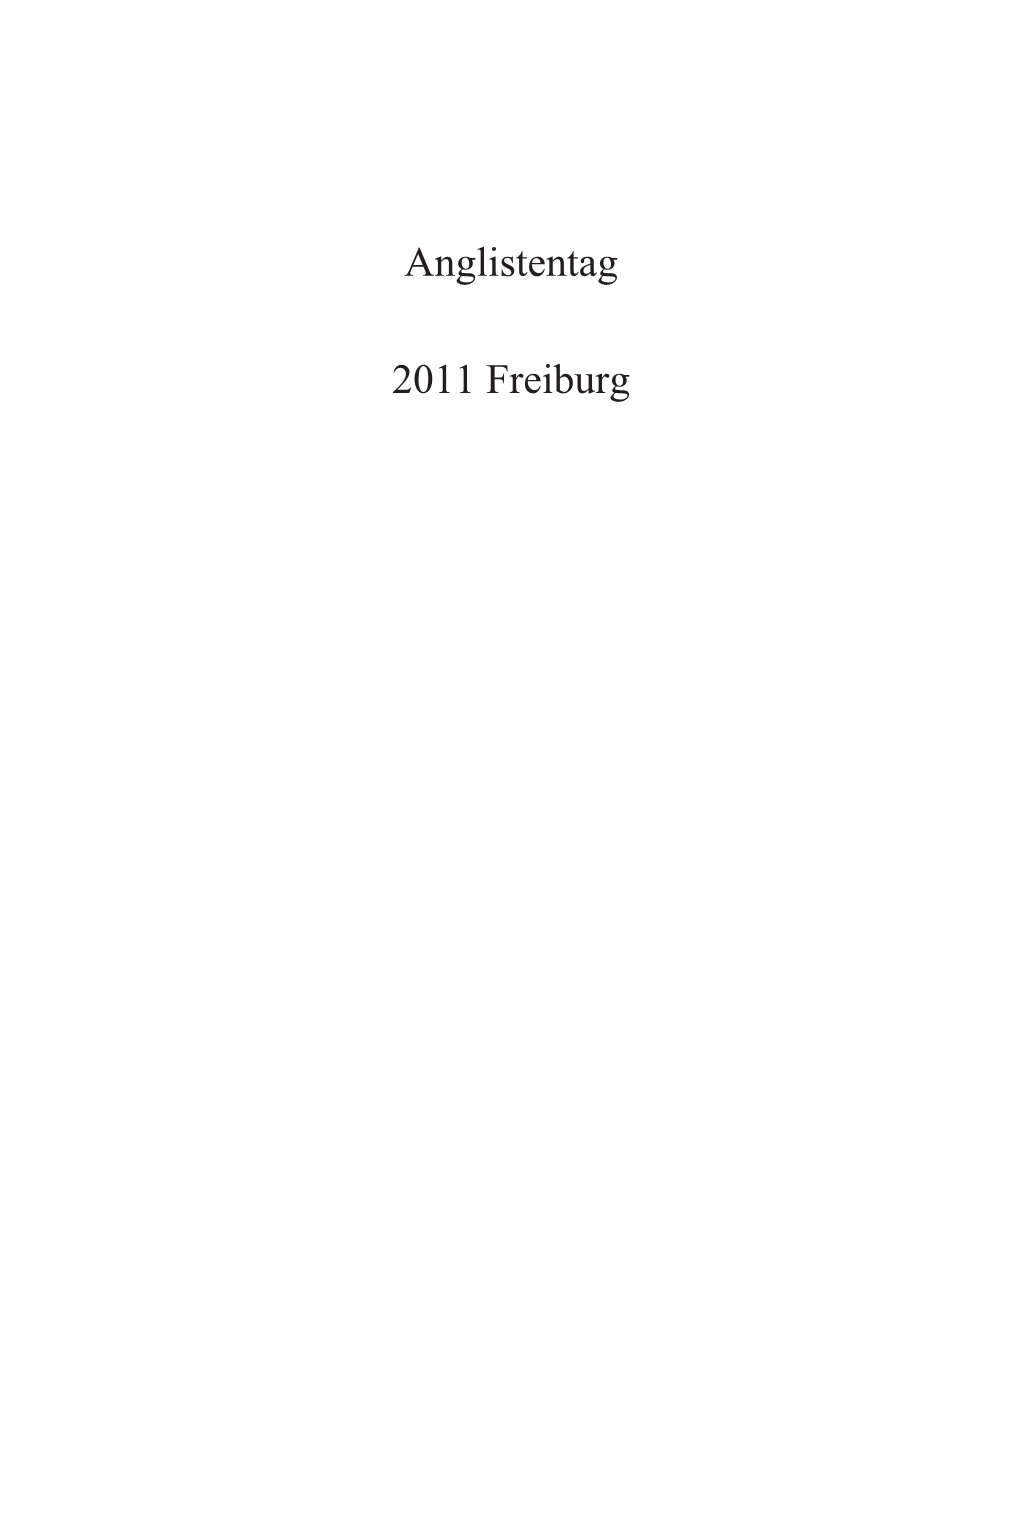 Anglistentag 2011 Freiburg